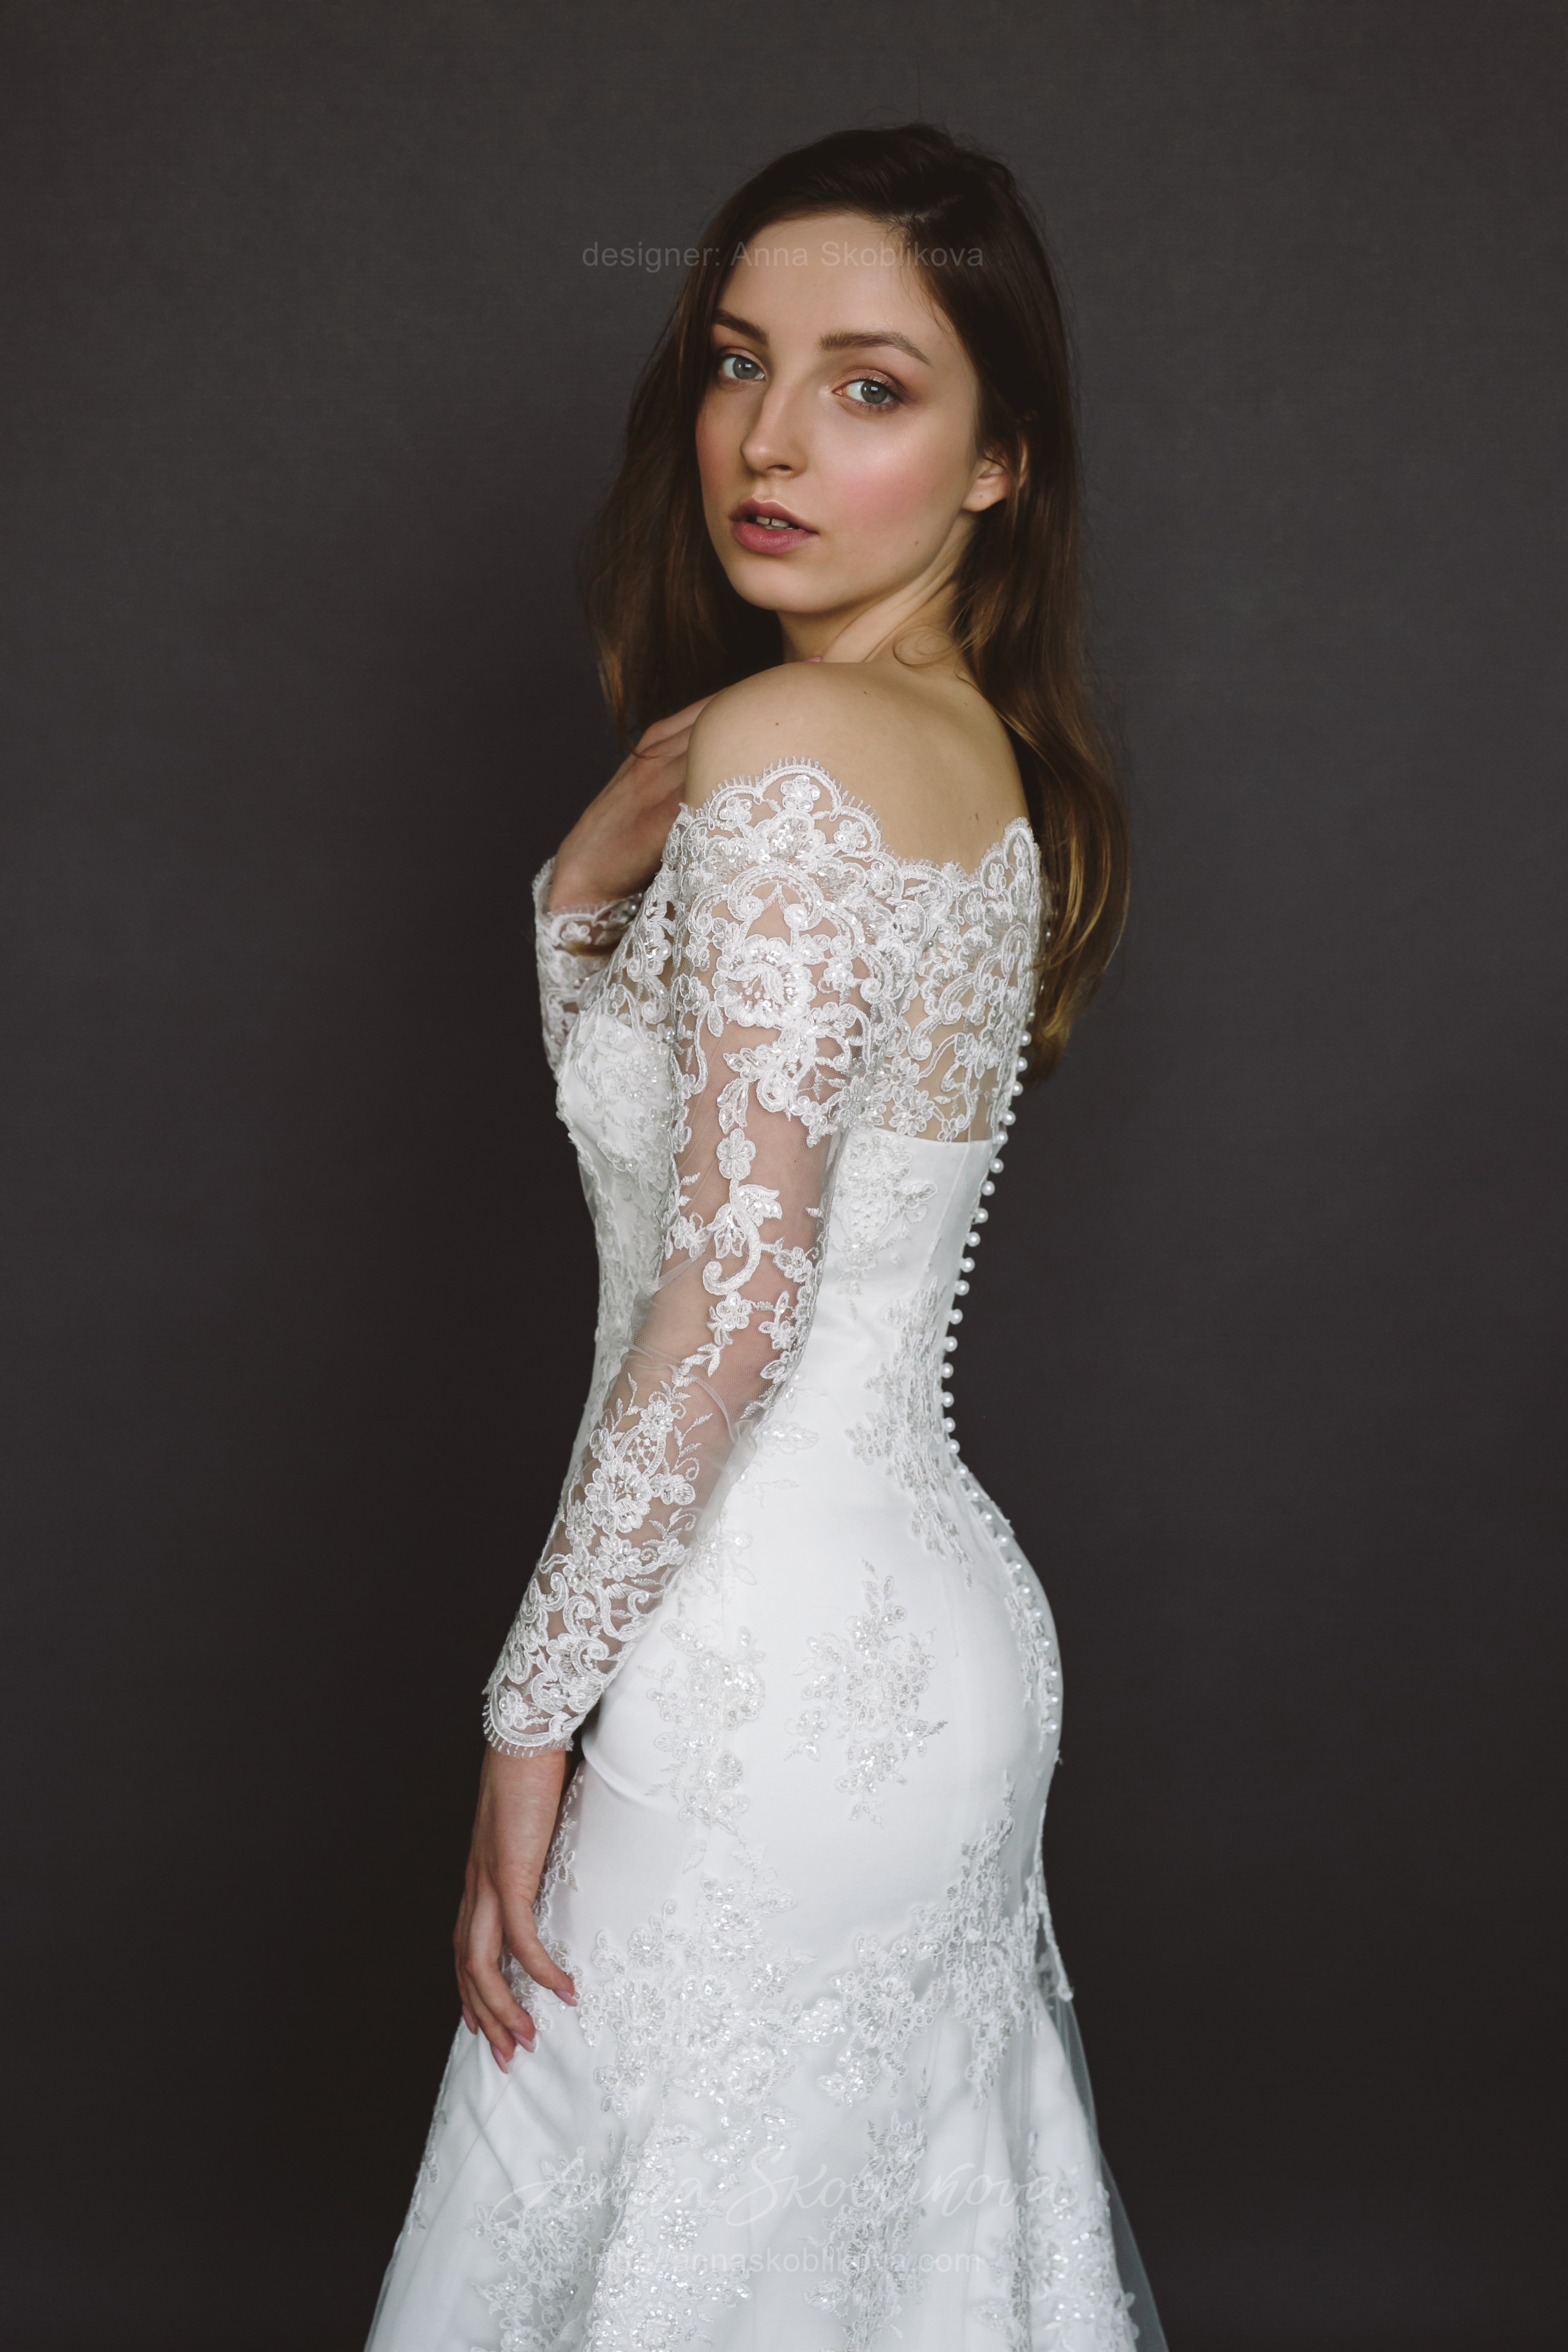 Lace Wedding Dress - Anna Skoblikova